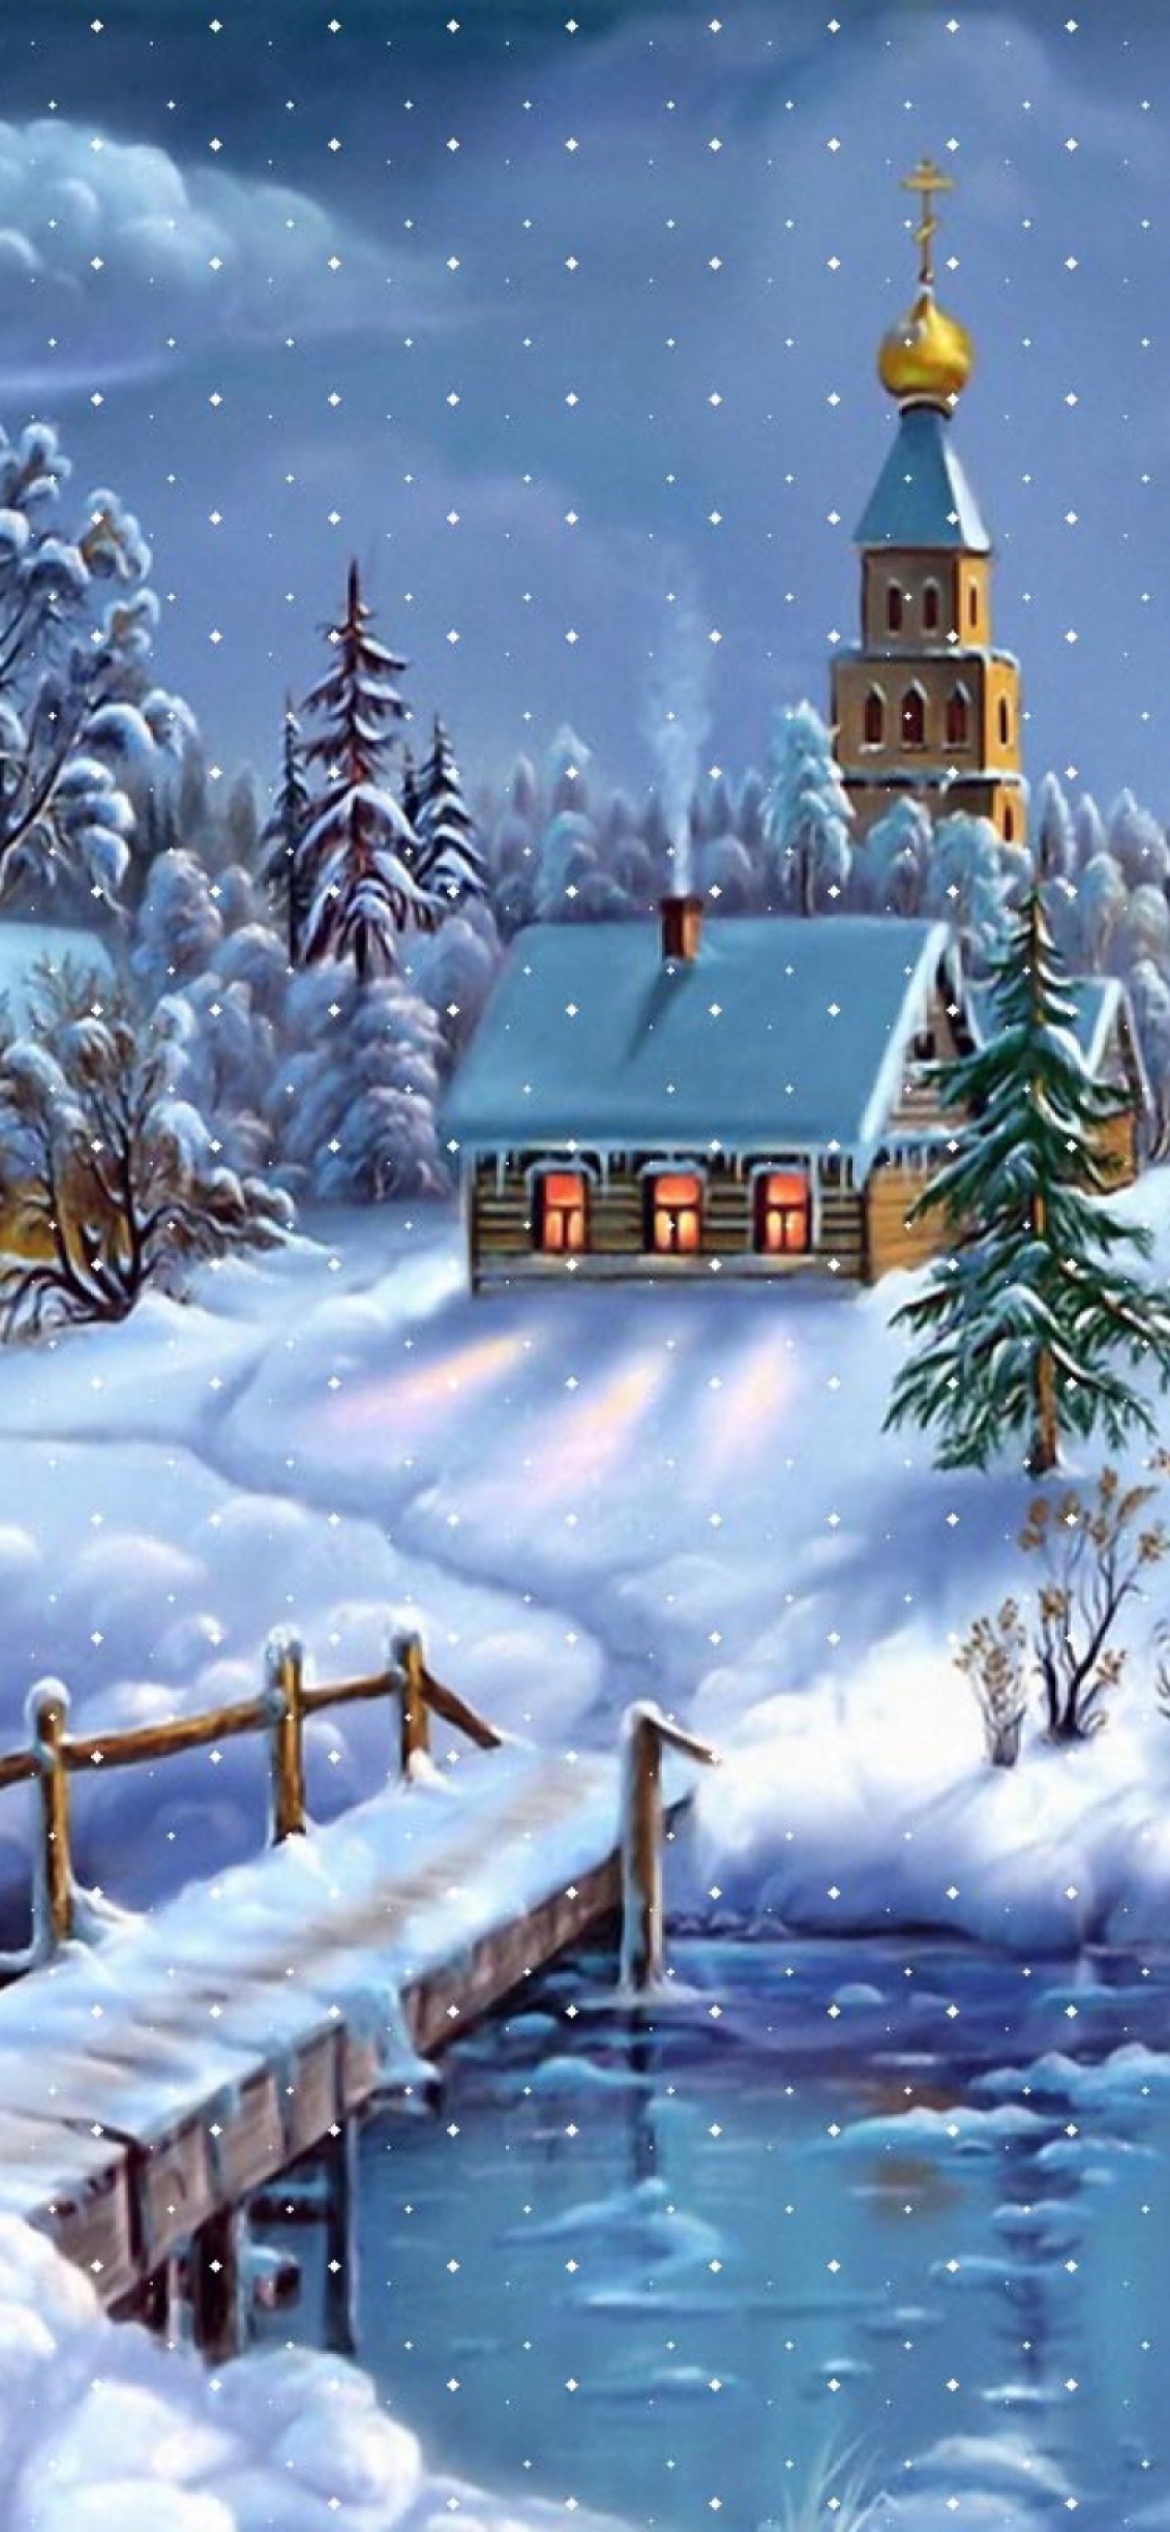 Das Christmas Night Wallpaper 1170x2532